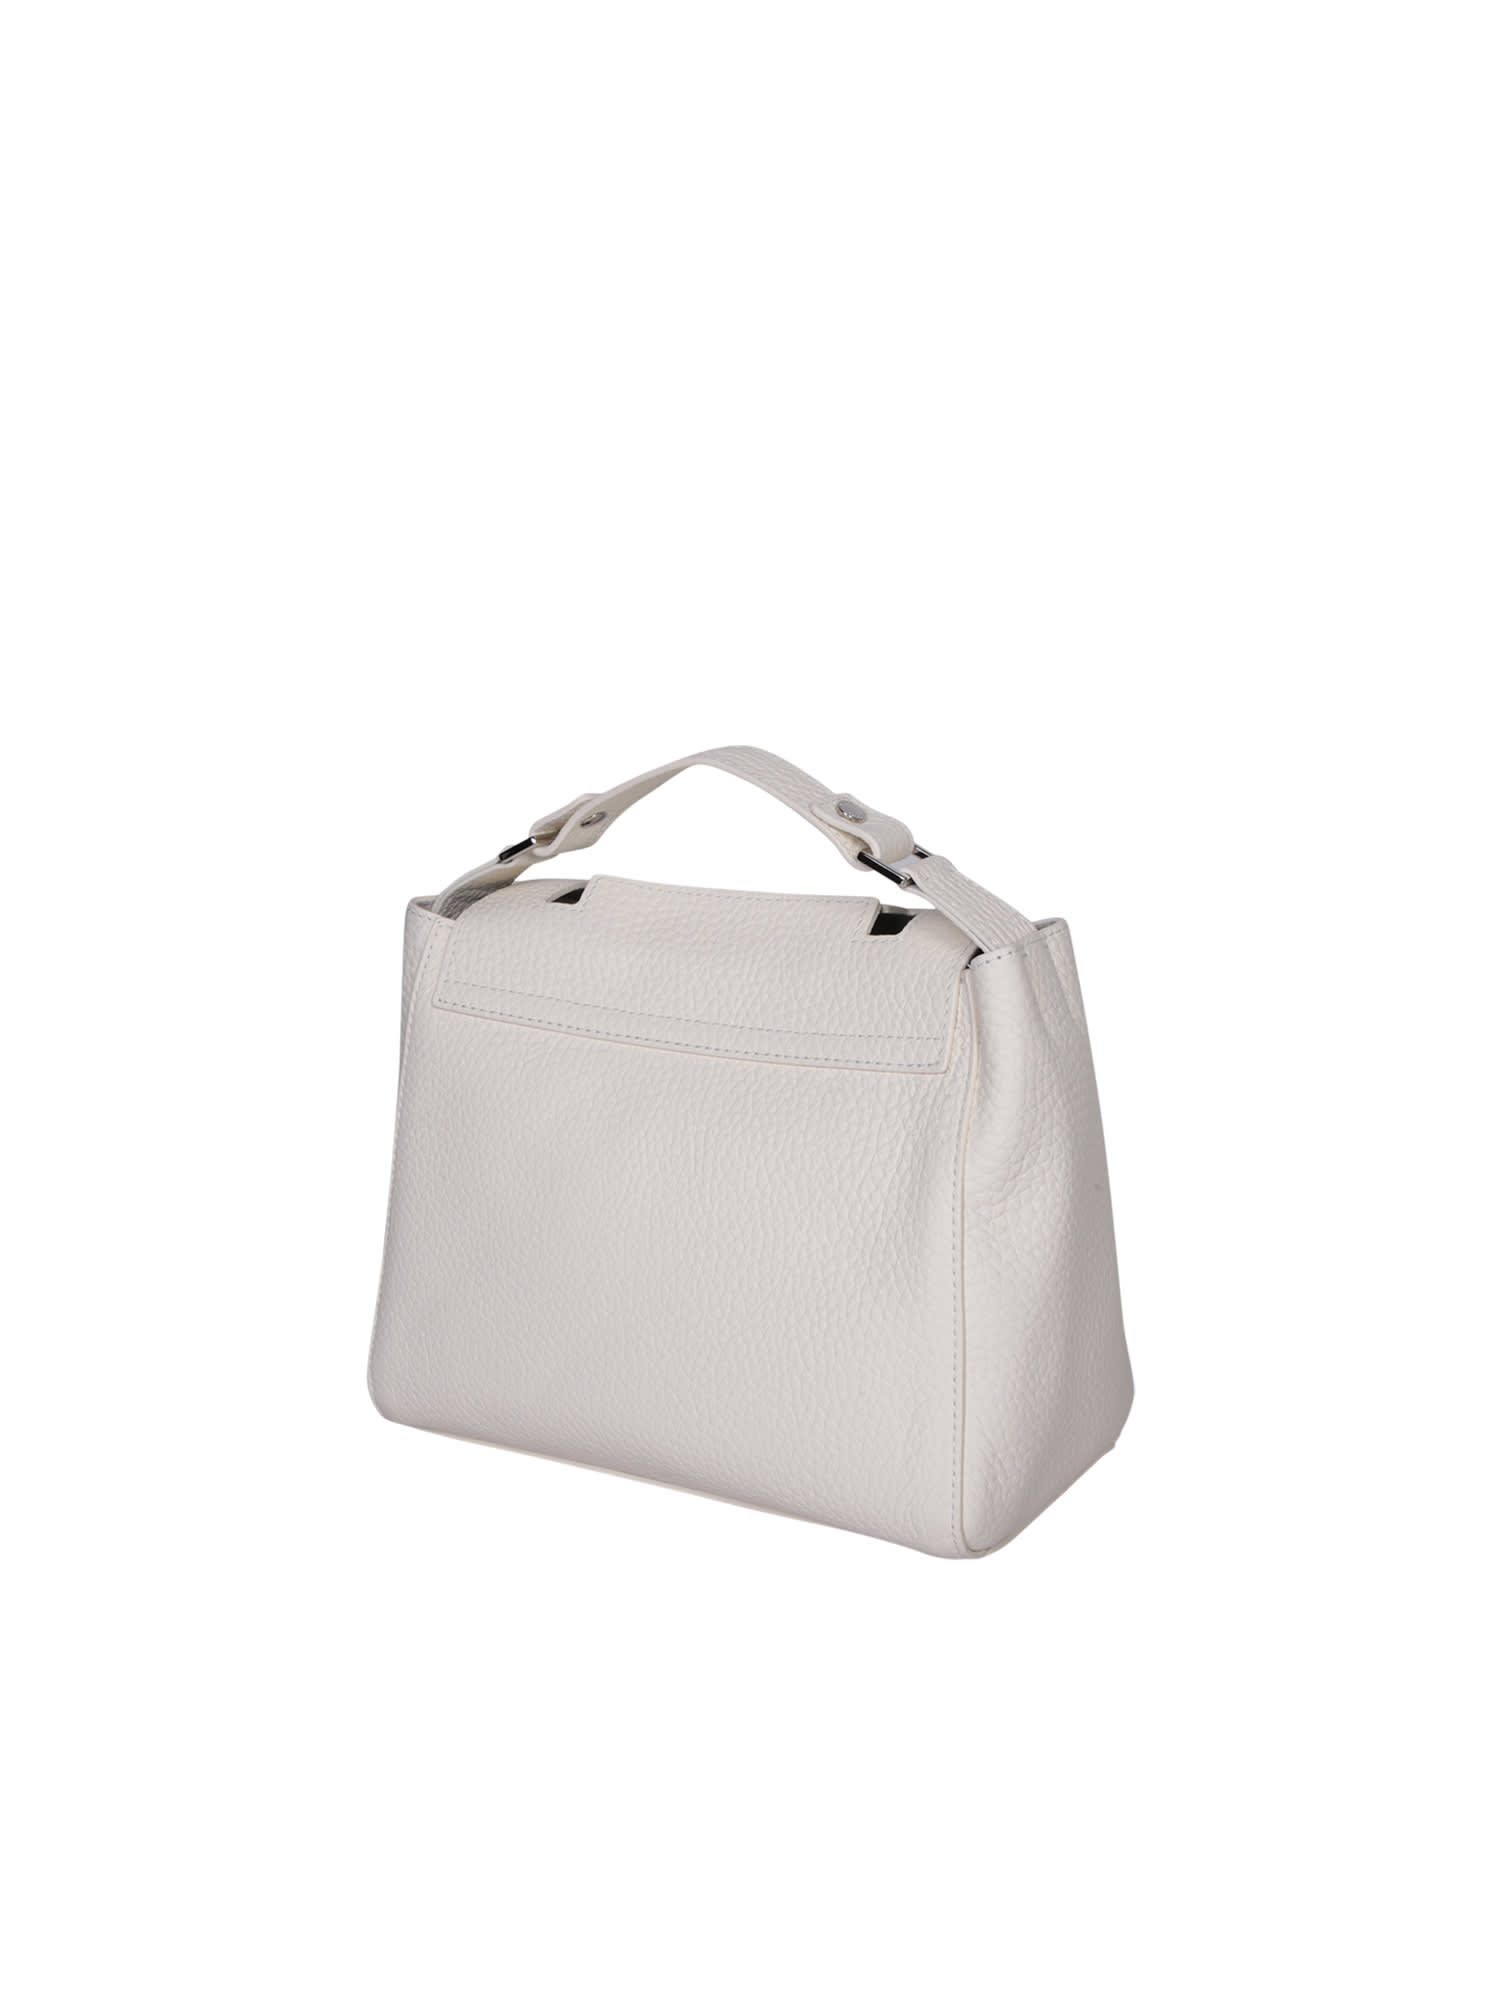 Shop Orciani Sveba Soft Small White Bag